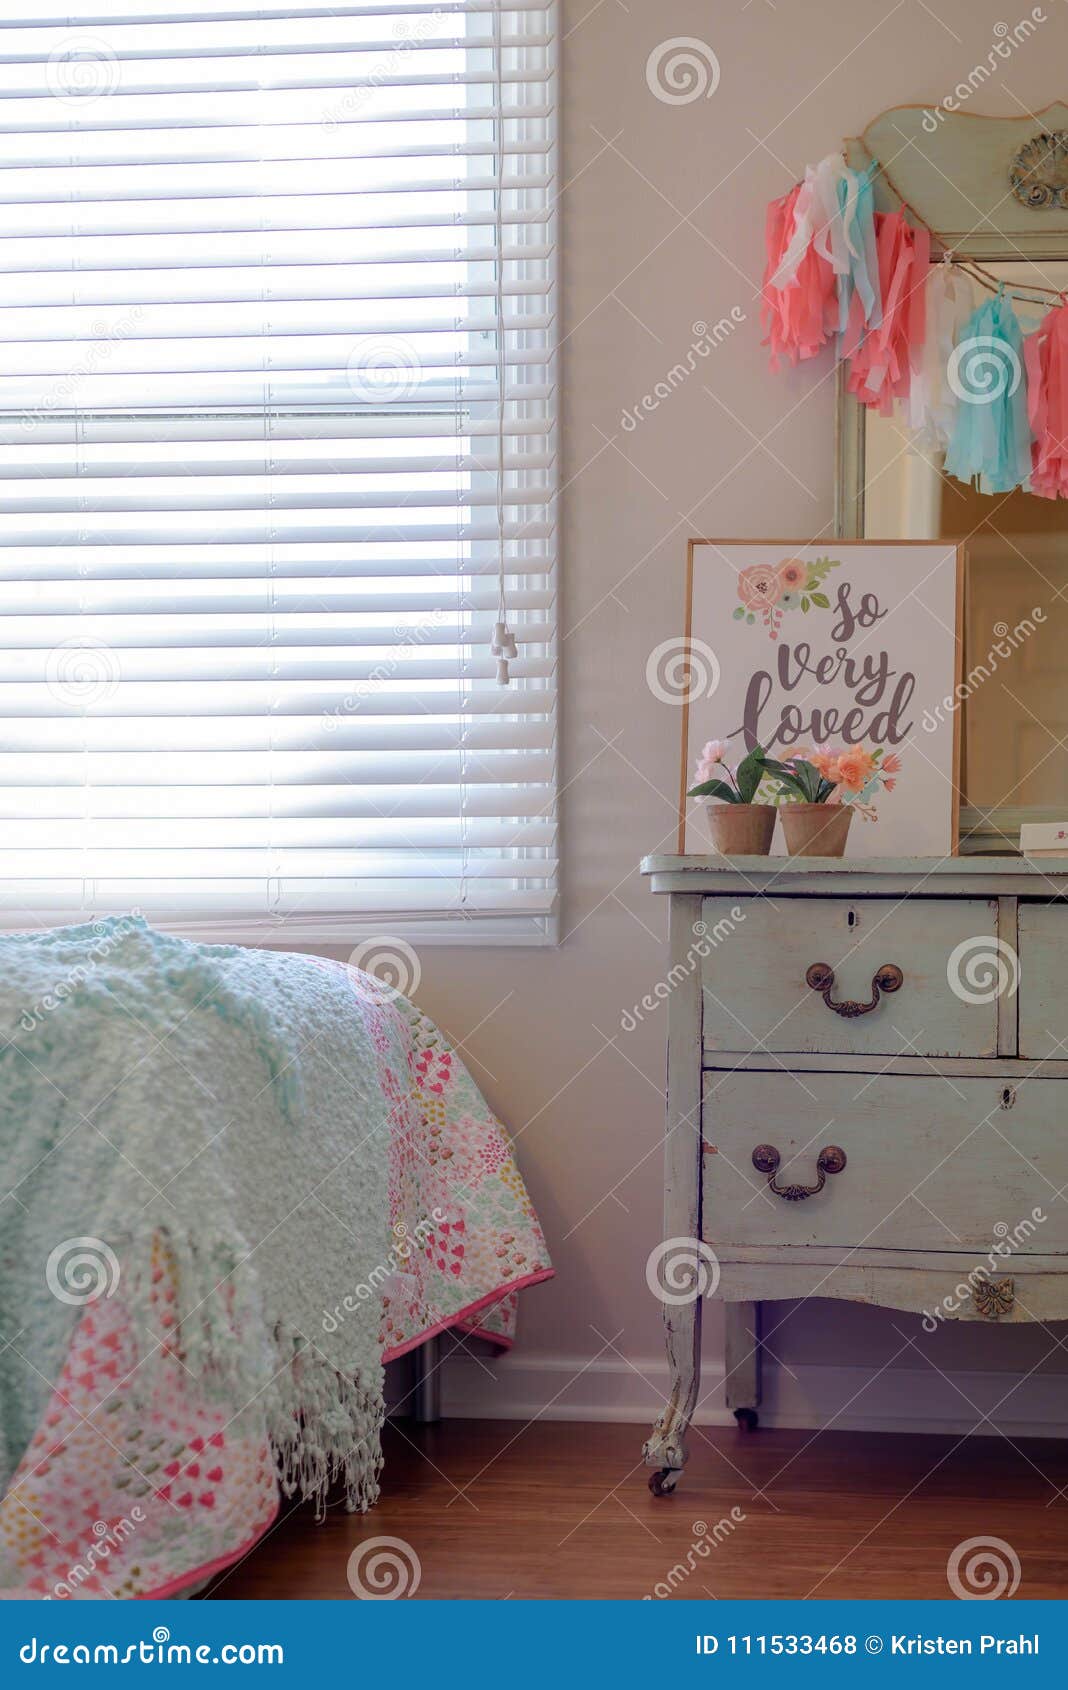 Girls Bedroom Decor With Vintage Dresser In Pastel Mint Green